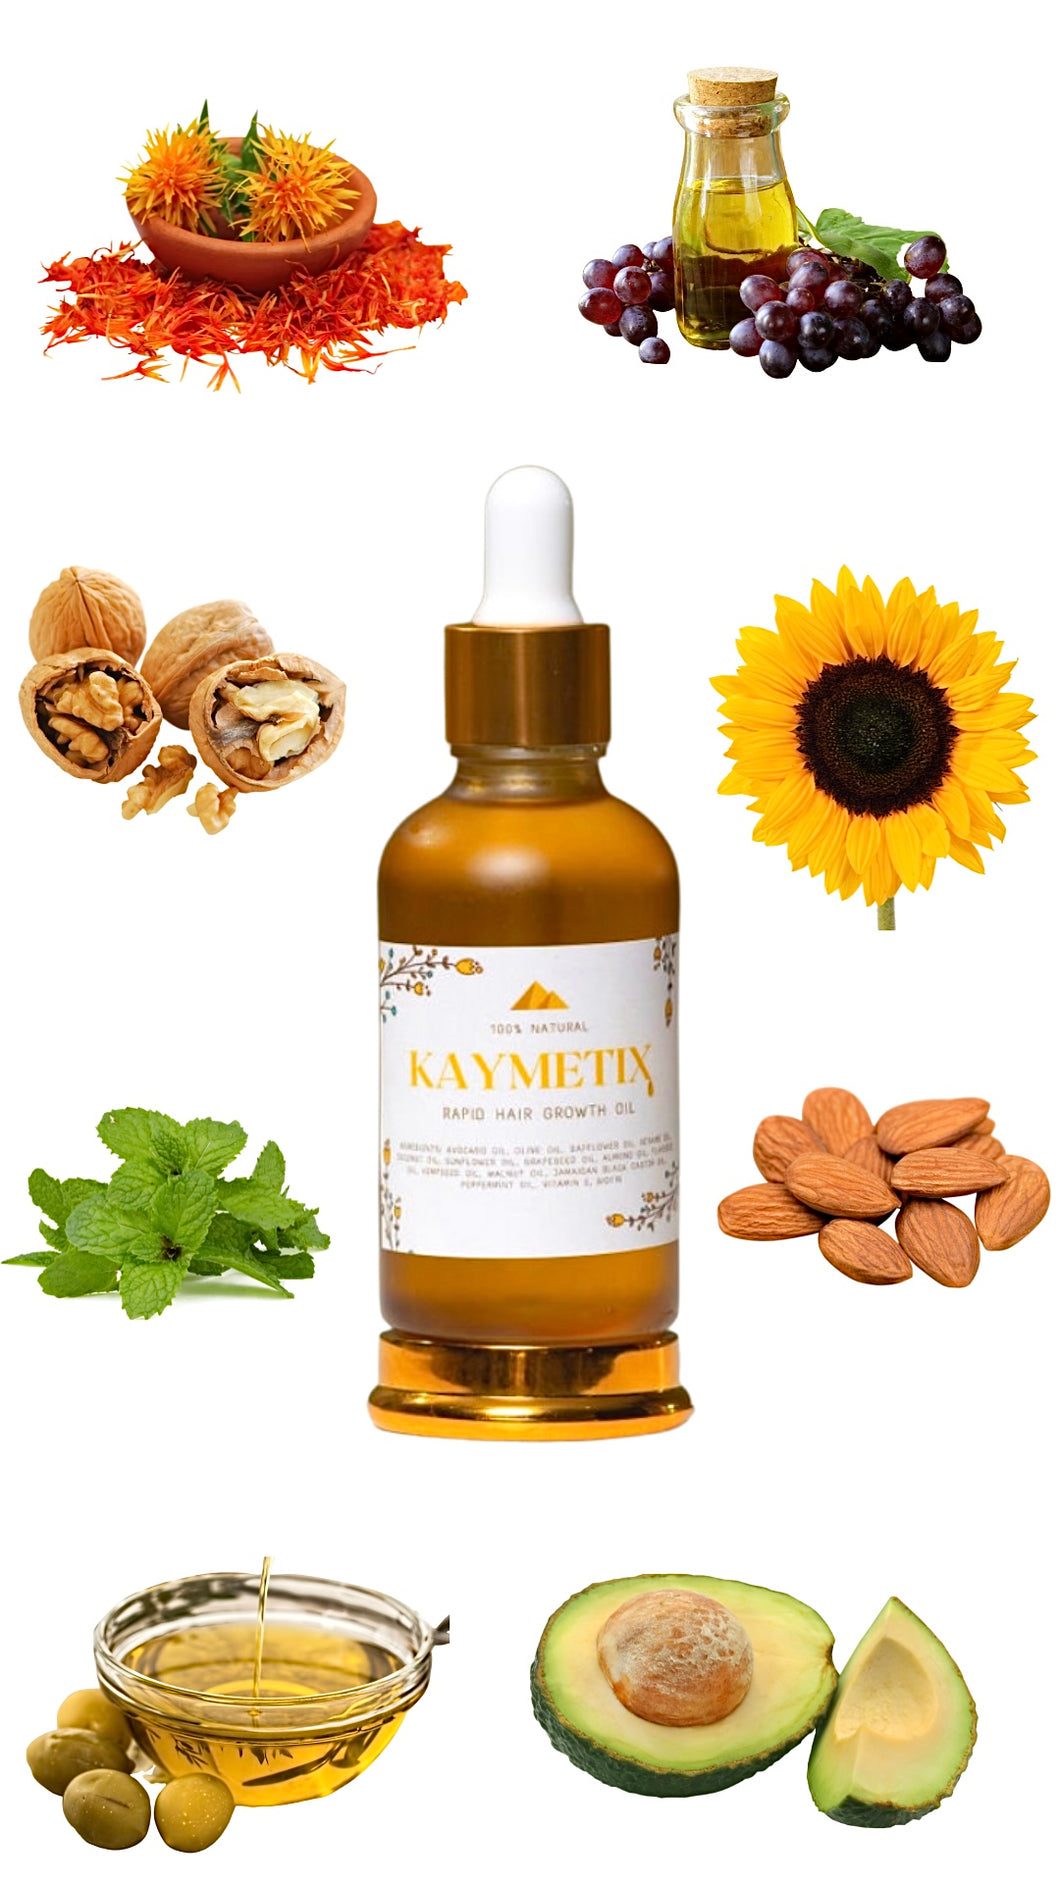 Kaymetix Rapid Hair Growth Oil